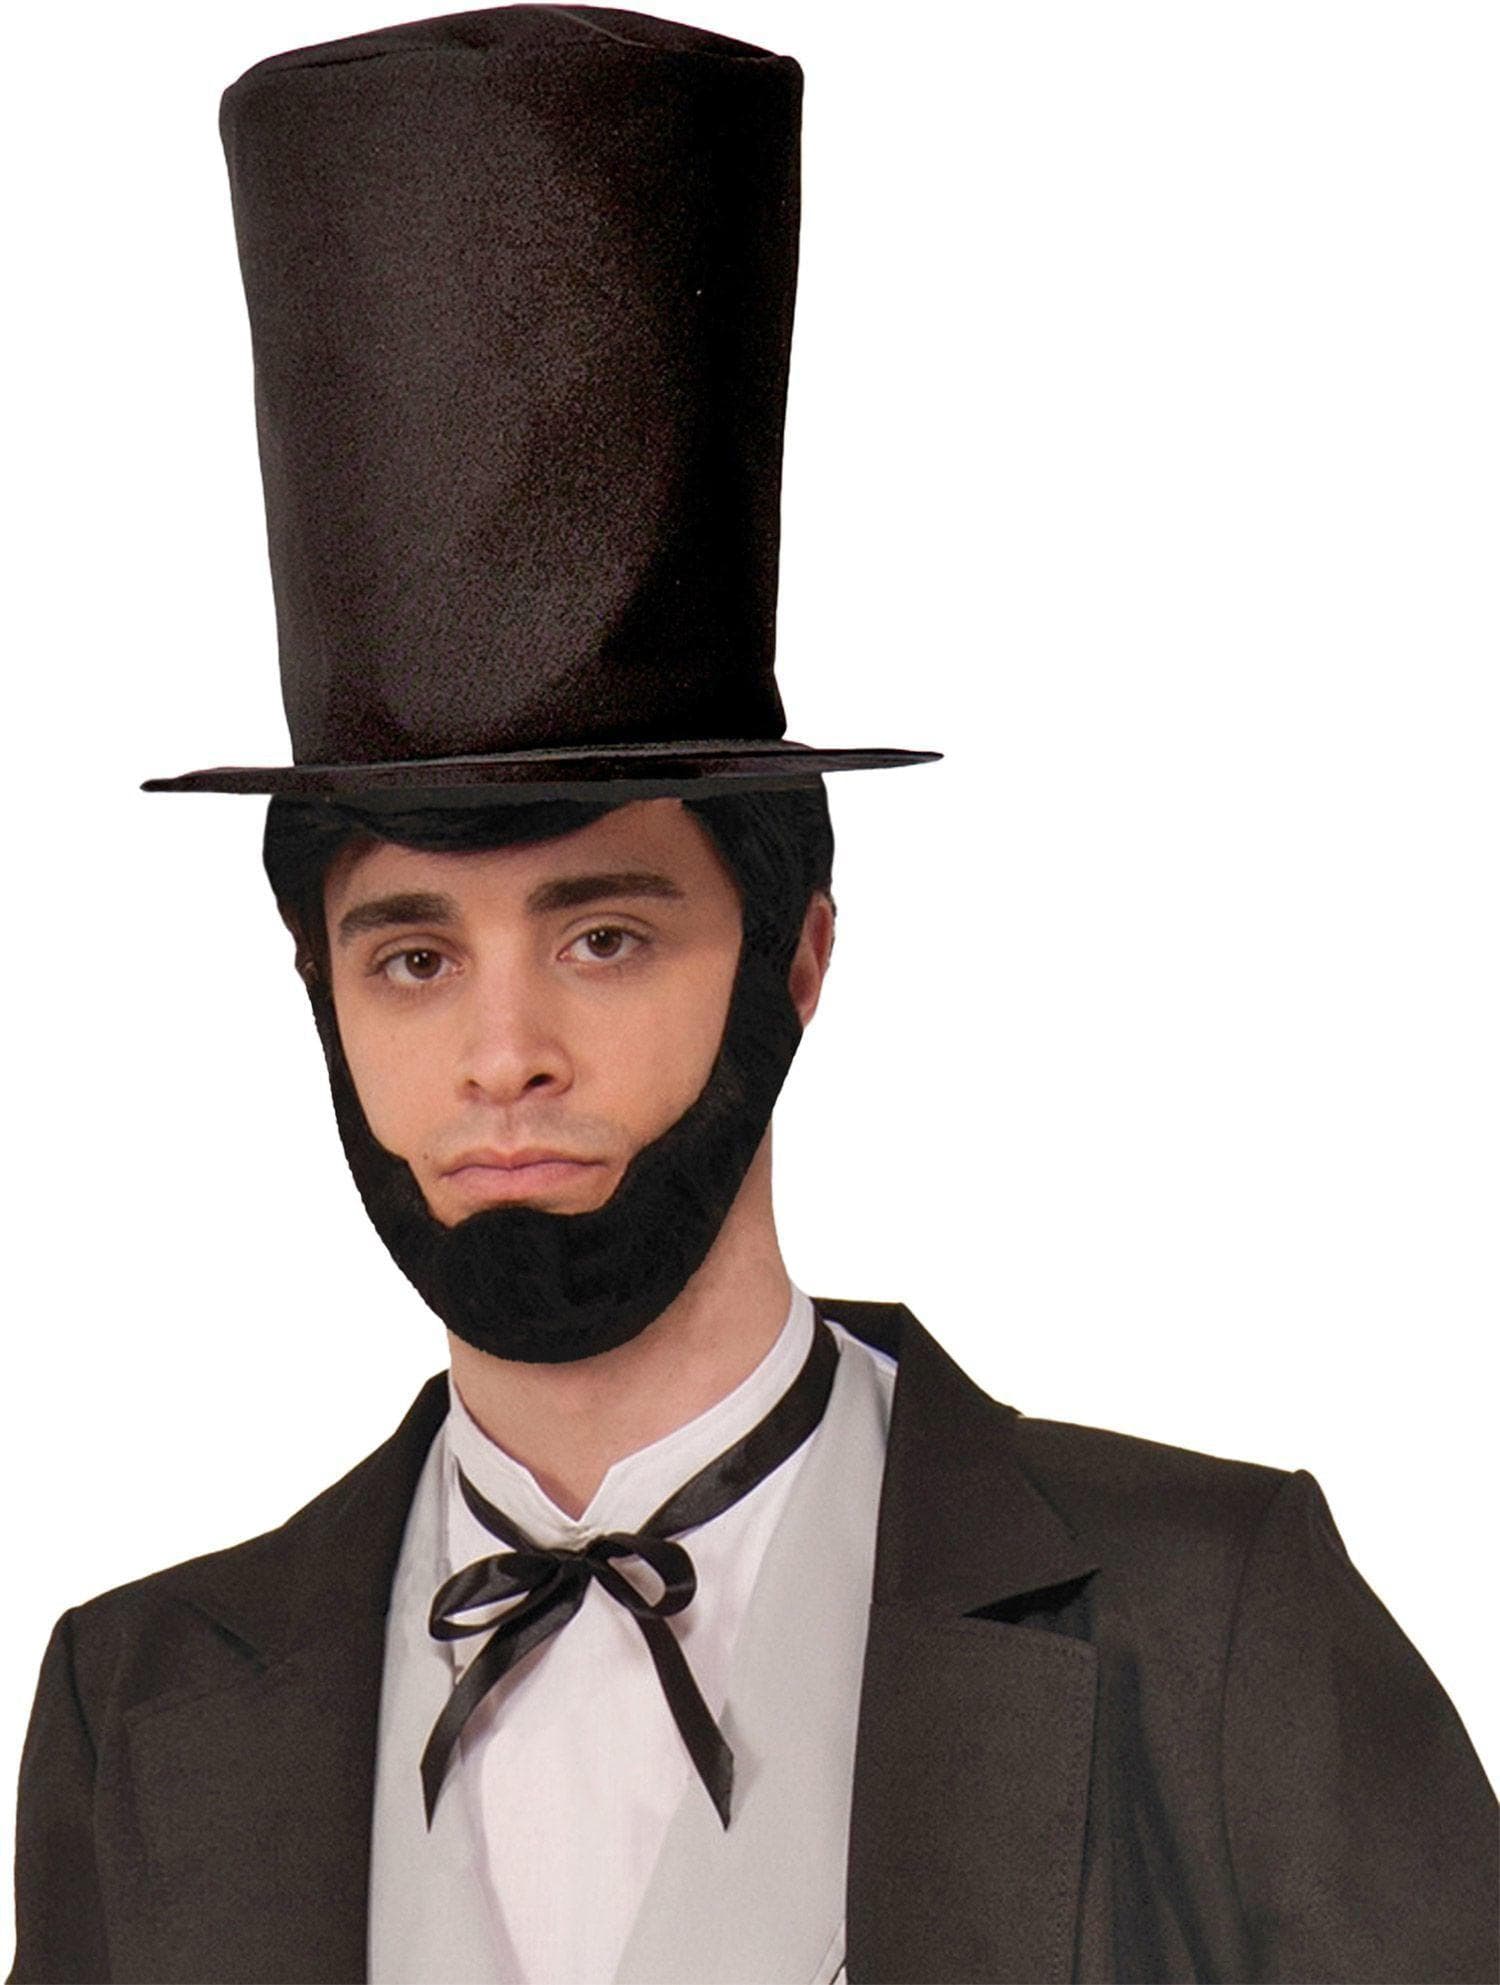 Abraham Lincoln Beard - costumes.com